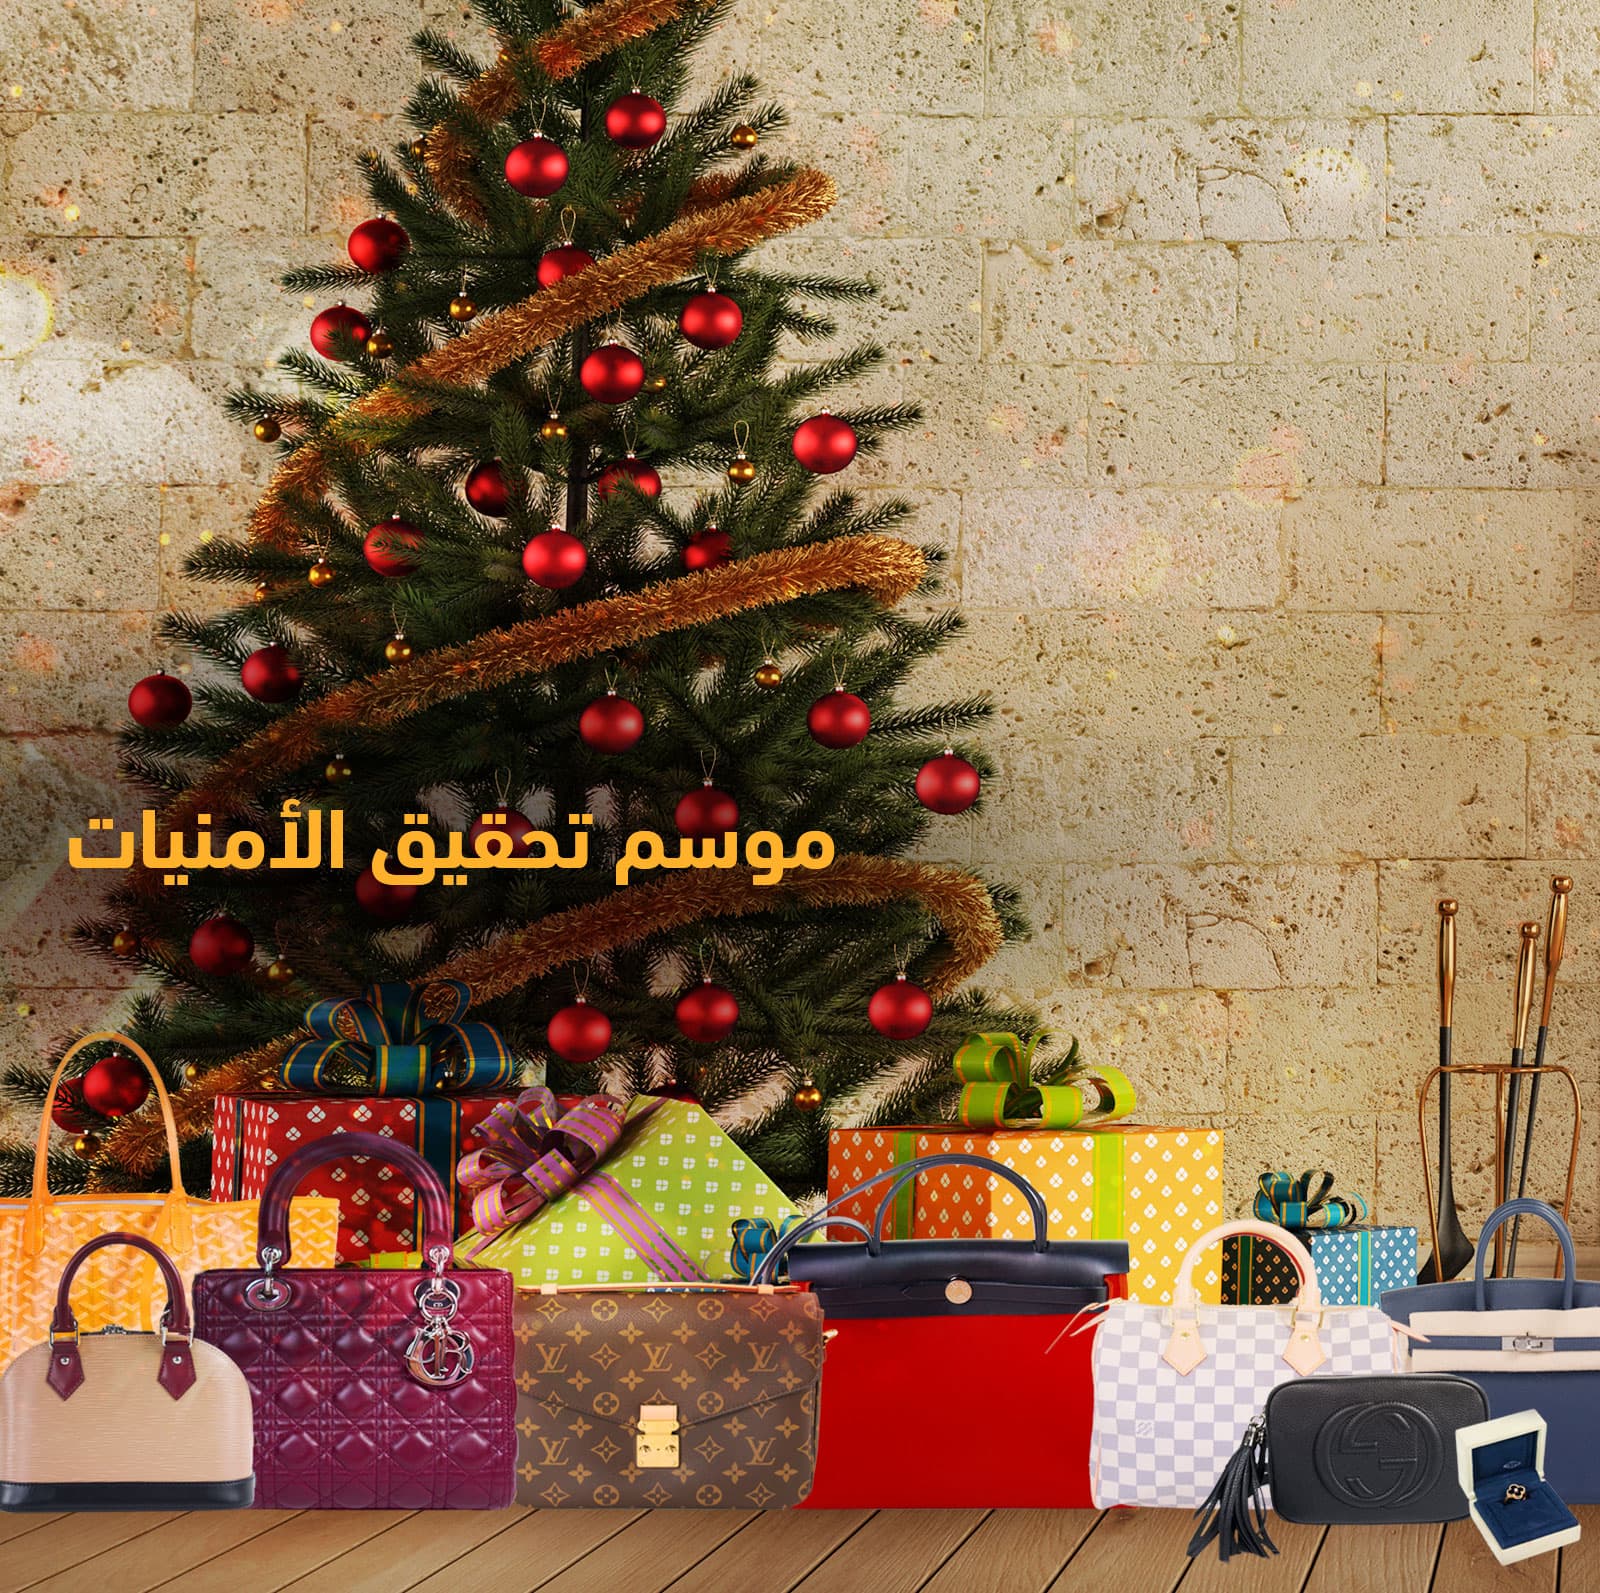 shop authentic new, used and pre-owned designer luxury handbags online in dubai UAE